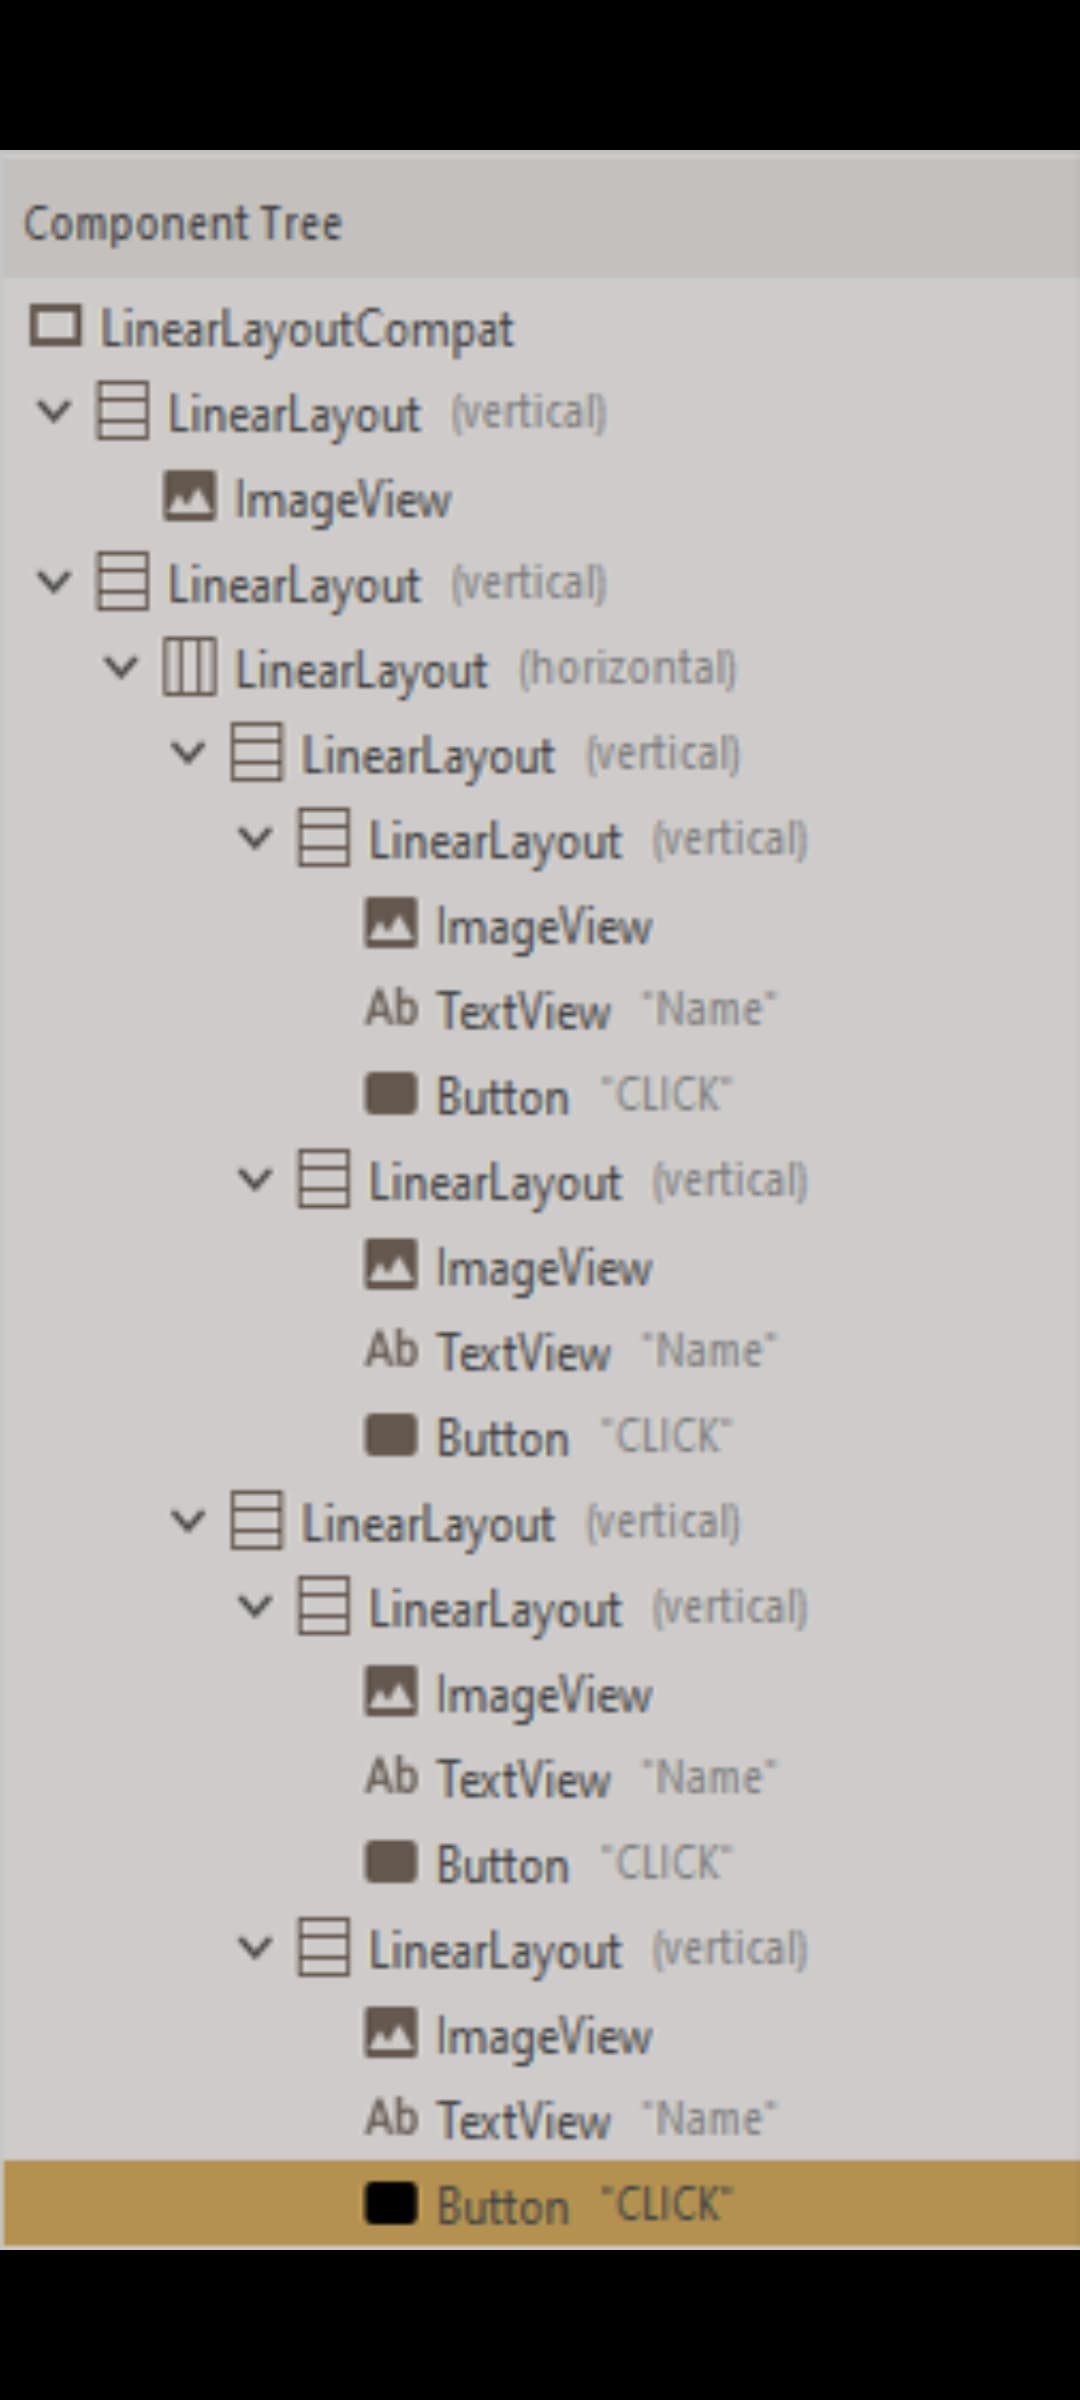 Component Tree
LinearLayoutCompat
v E LinearLayout (vertical)
A ImageView
E LinearLayout (vertical)
I LinearLayout (horizontal)
vA LinearLayout (vertical)
E Linearlayout (vertical)
M ImageView
Ab TextView "Name"
Button "CLICK"
E LinearLayout (vertical)
A ImageView
Ab TextView "Name"
Button "CLICK"
E LinearLayout (vertical)
E Linearlayout (vertical)
M ImageView
Ab TextView "Name"
Button "CLICK"
E Linearlayout (vertical)
M ImageView
Ab TextView "Name"
Button "CLICK"
